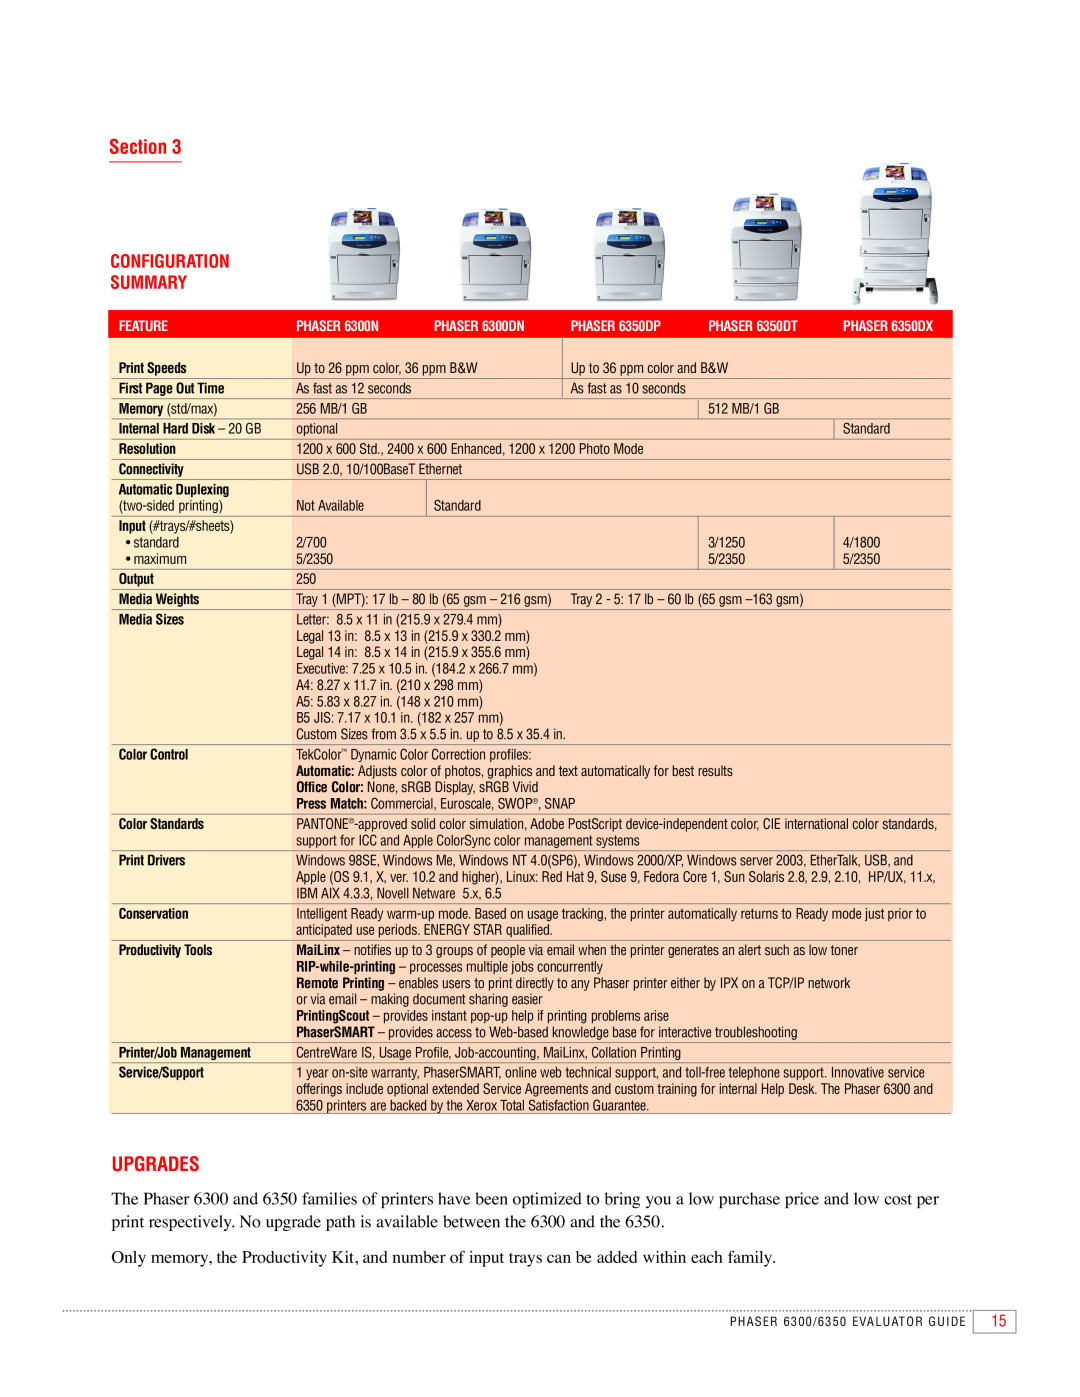 Xerox 6300, 6350 manual Section, Upgrades, Configuration Summary 